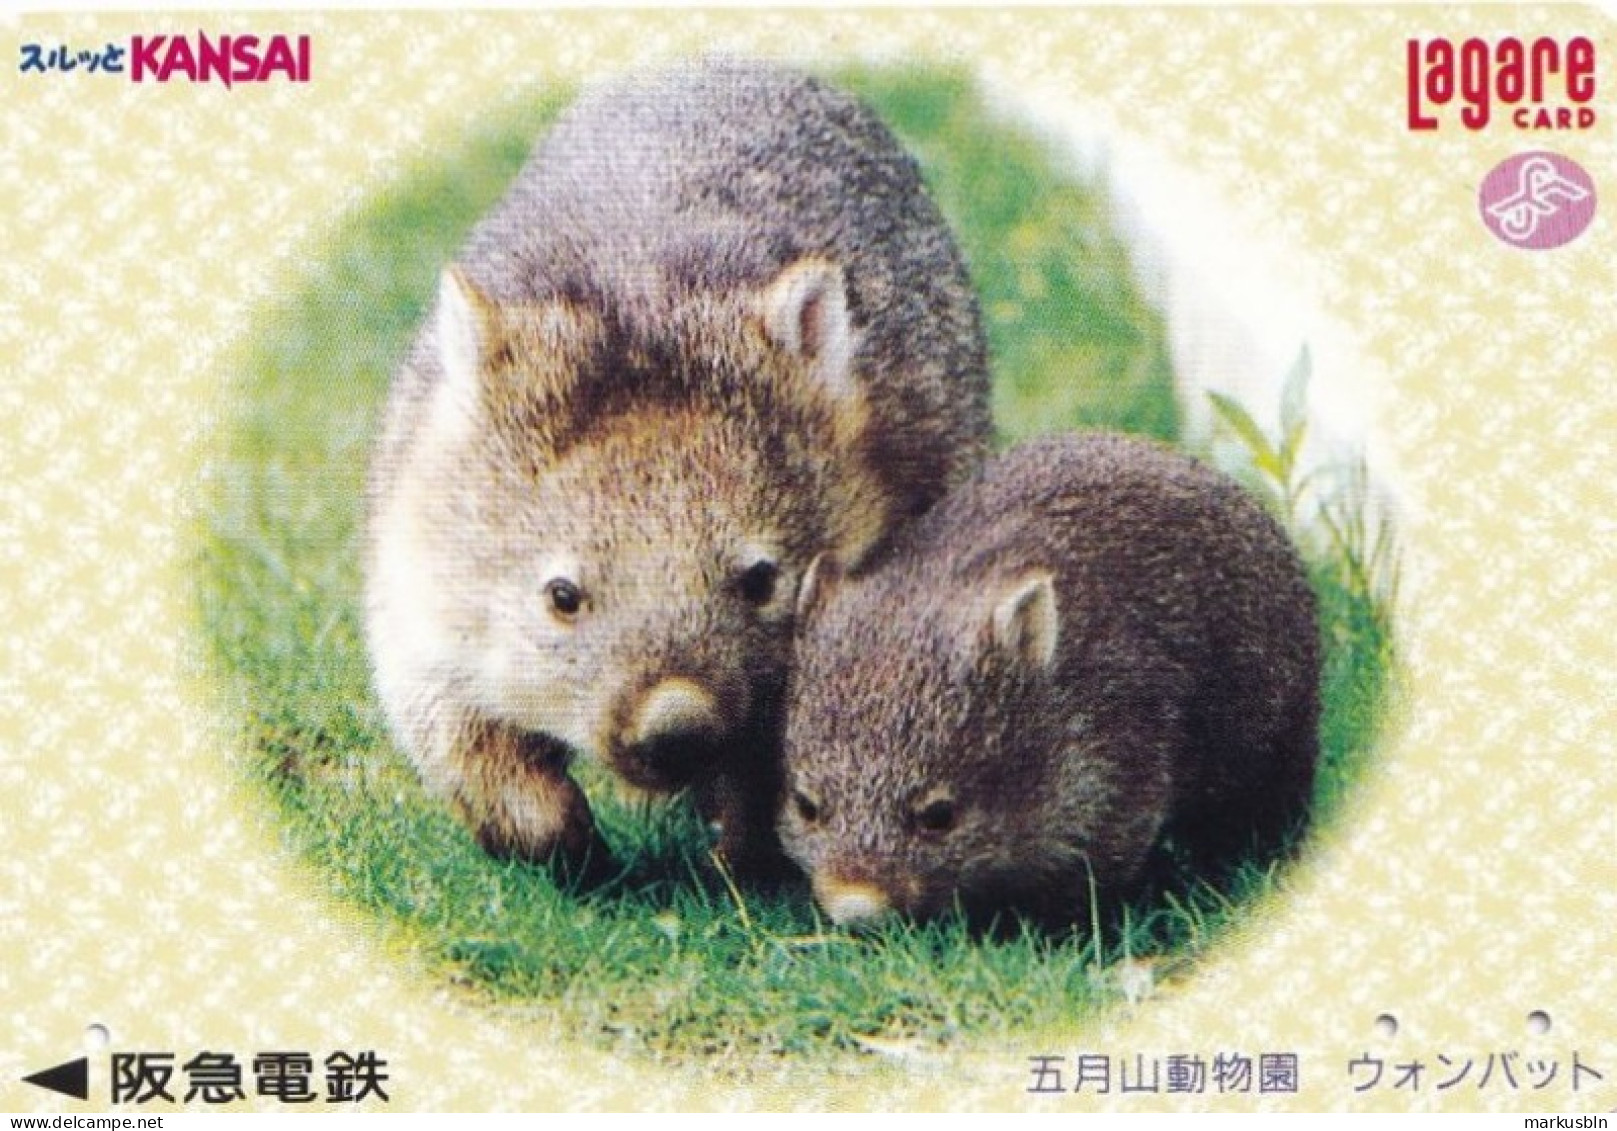 Japan Prepaid Lagare Card 2000 - Kansai Animals Wombat - Japan